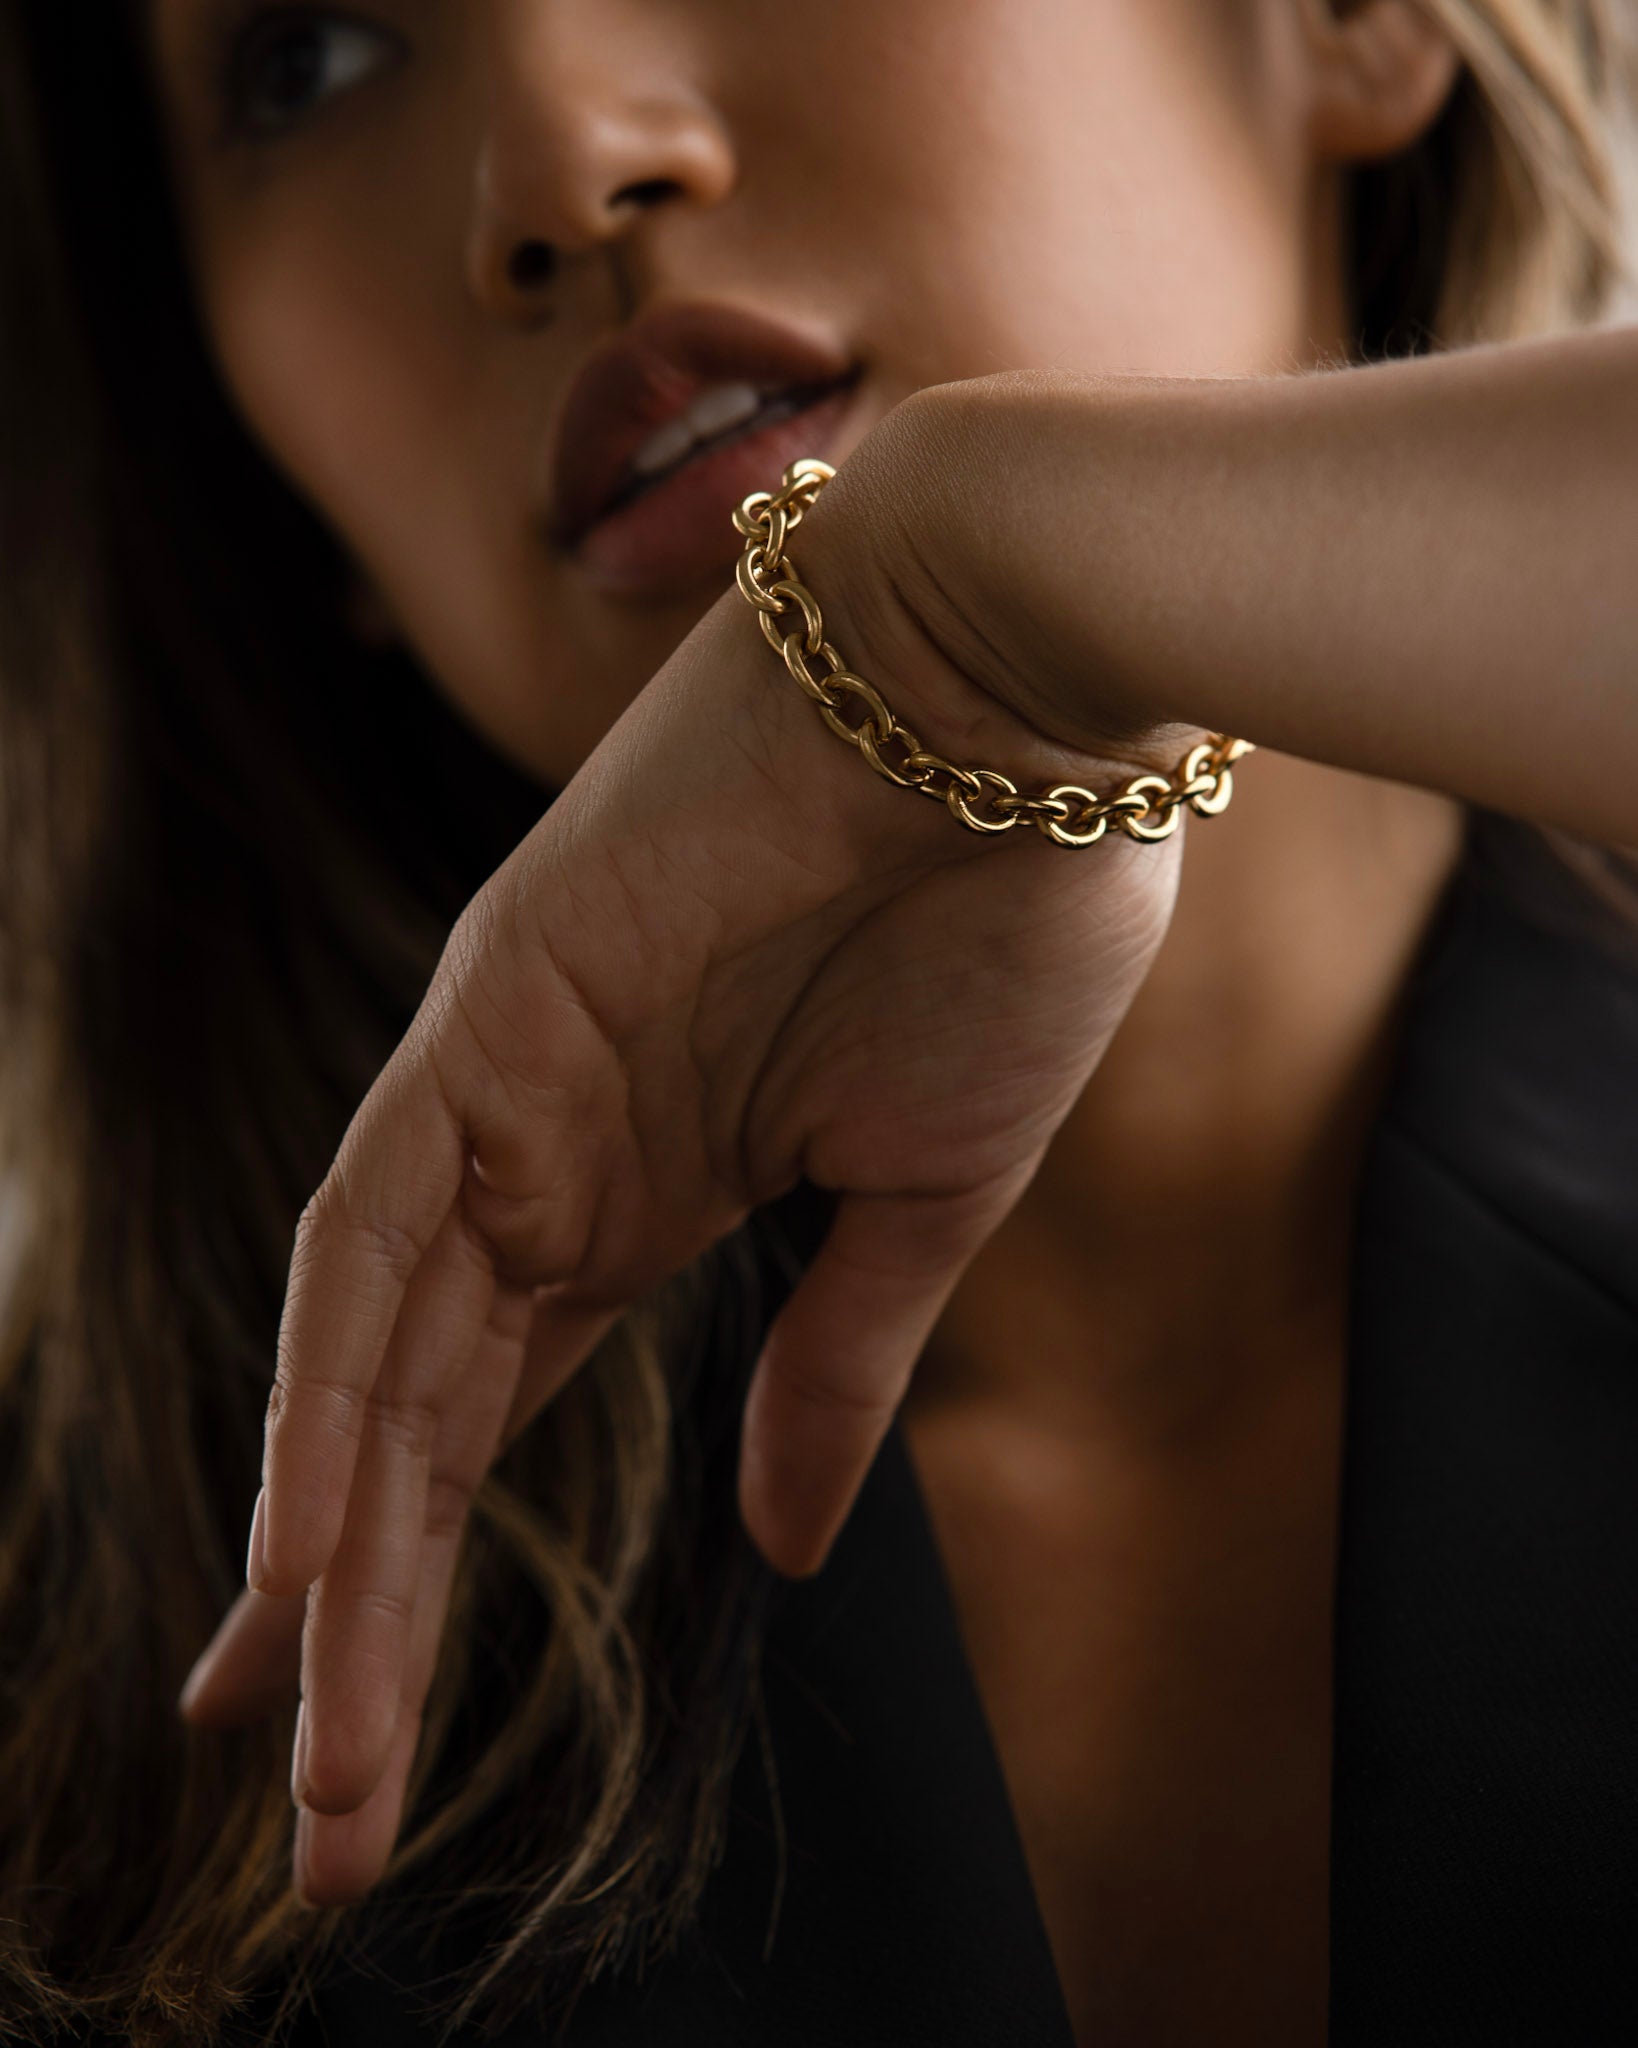 FJ Watches FIVE JWLRY jewel jewelry bijou Vostok cable chain chaine forcat épaisse large bracelet gold or 14k femme women acier inoxydable stainless steel